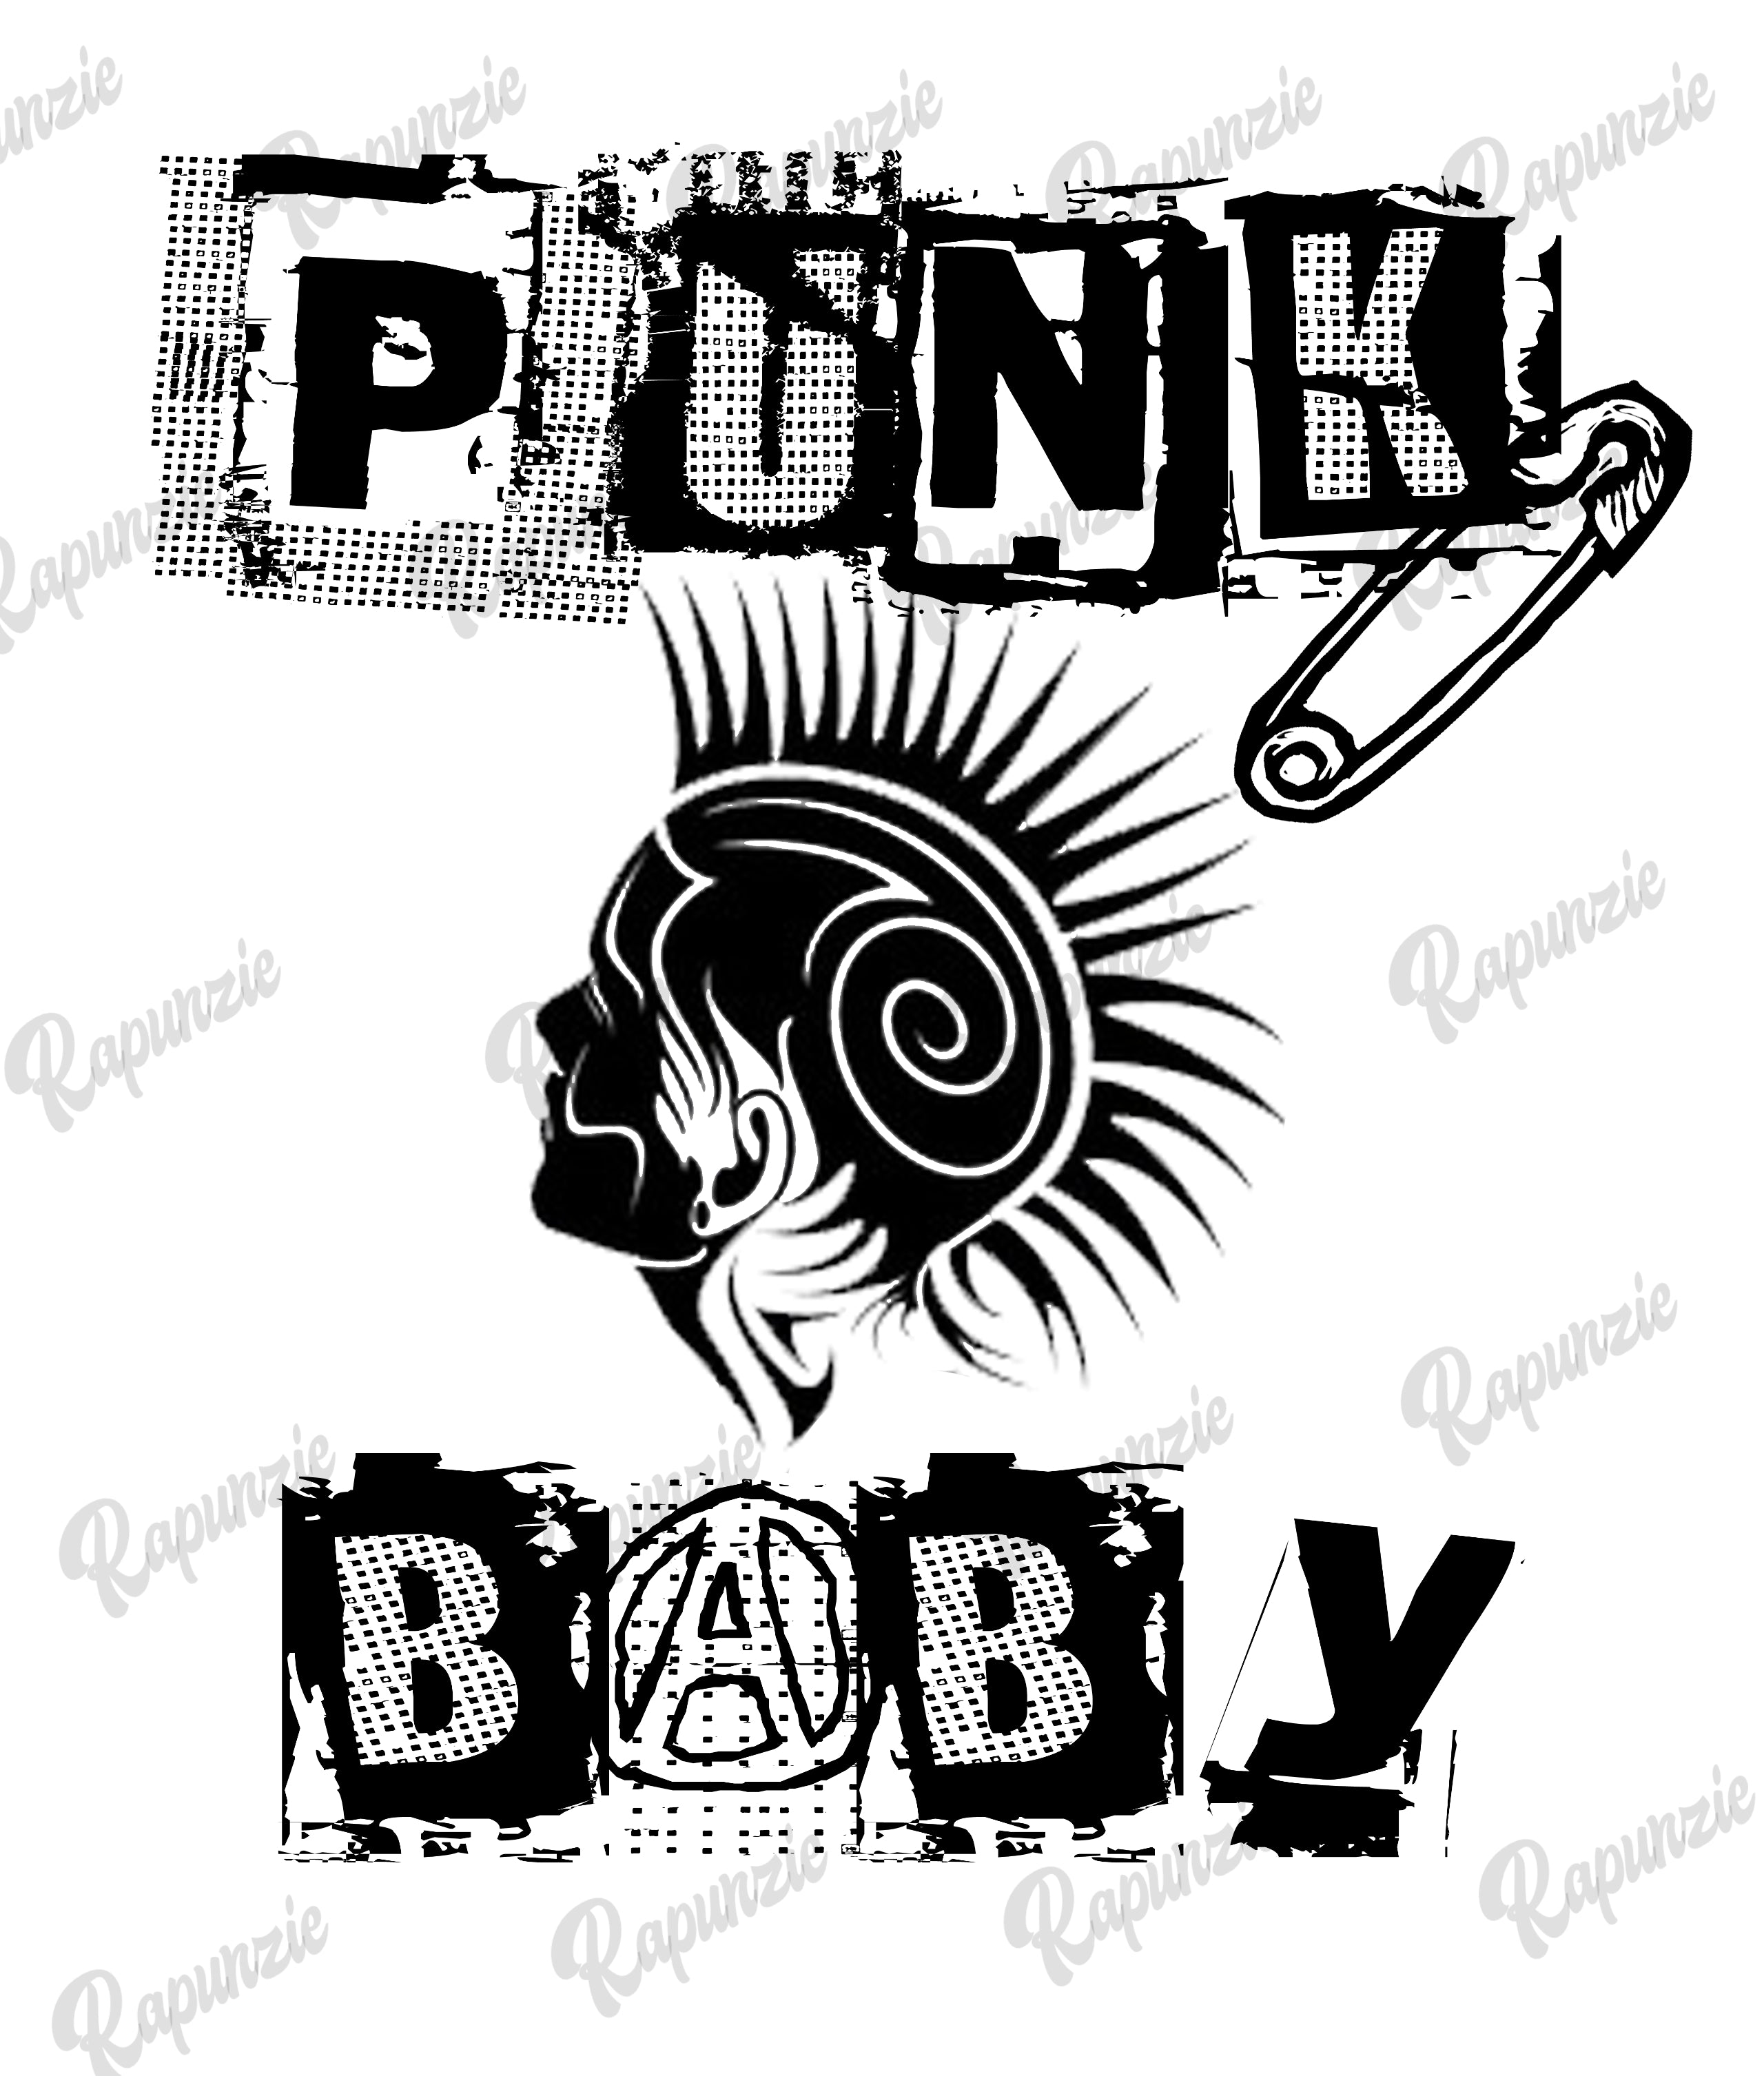 punk rock baby clip art